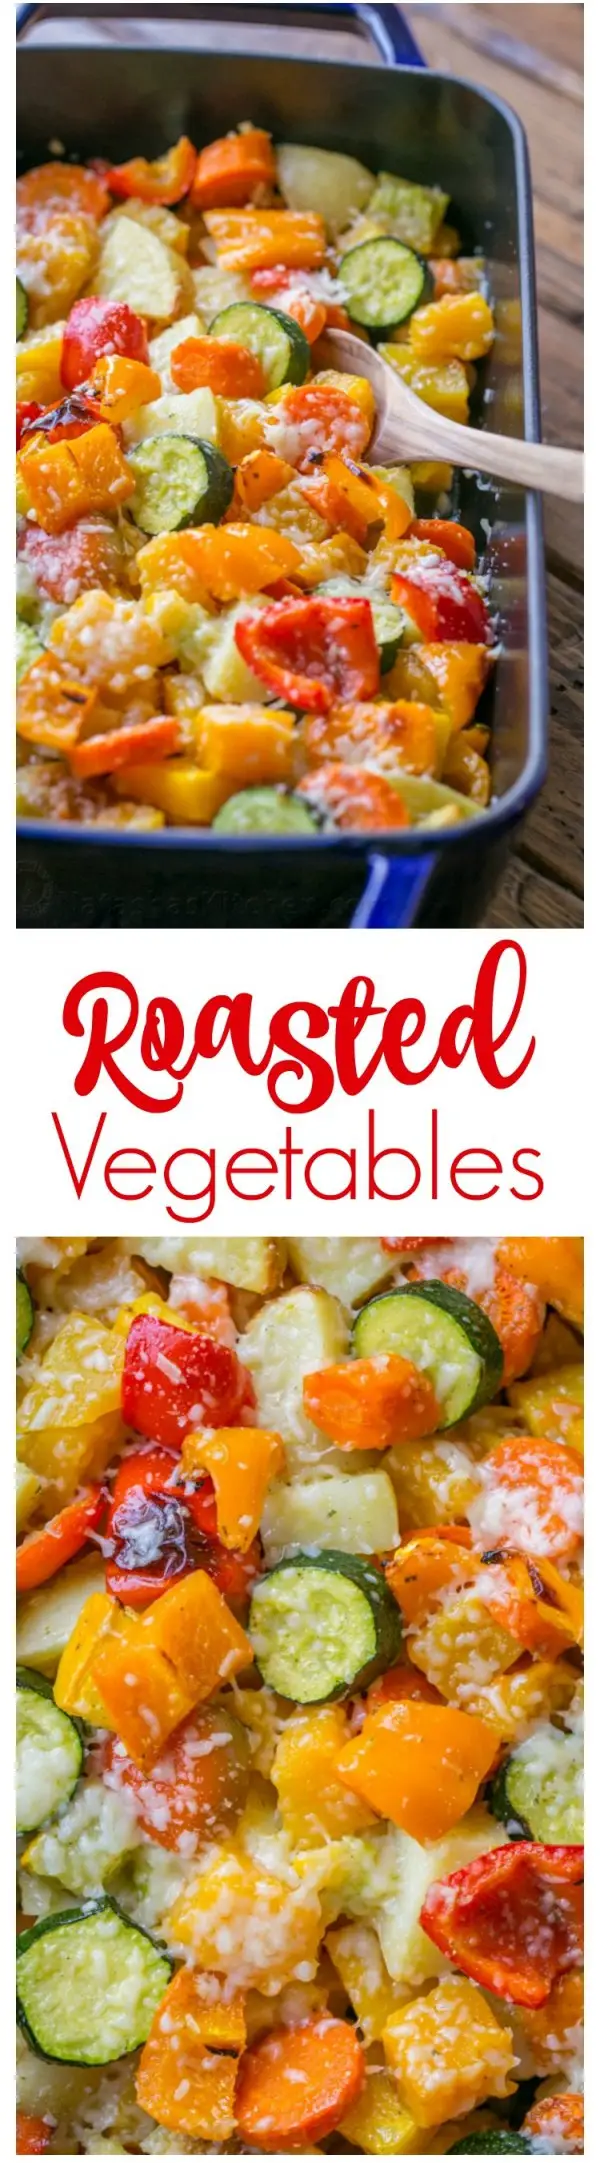 Roasted Vegetables